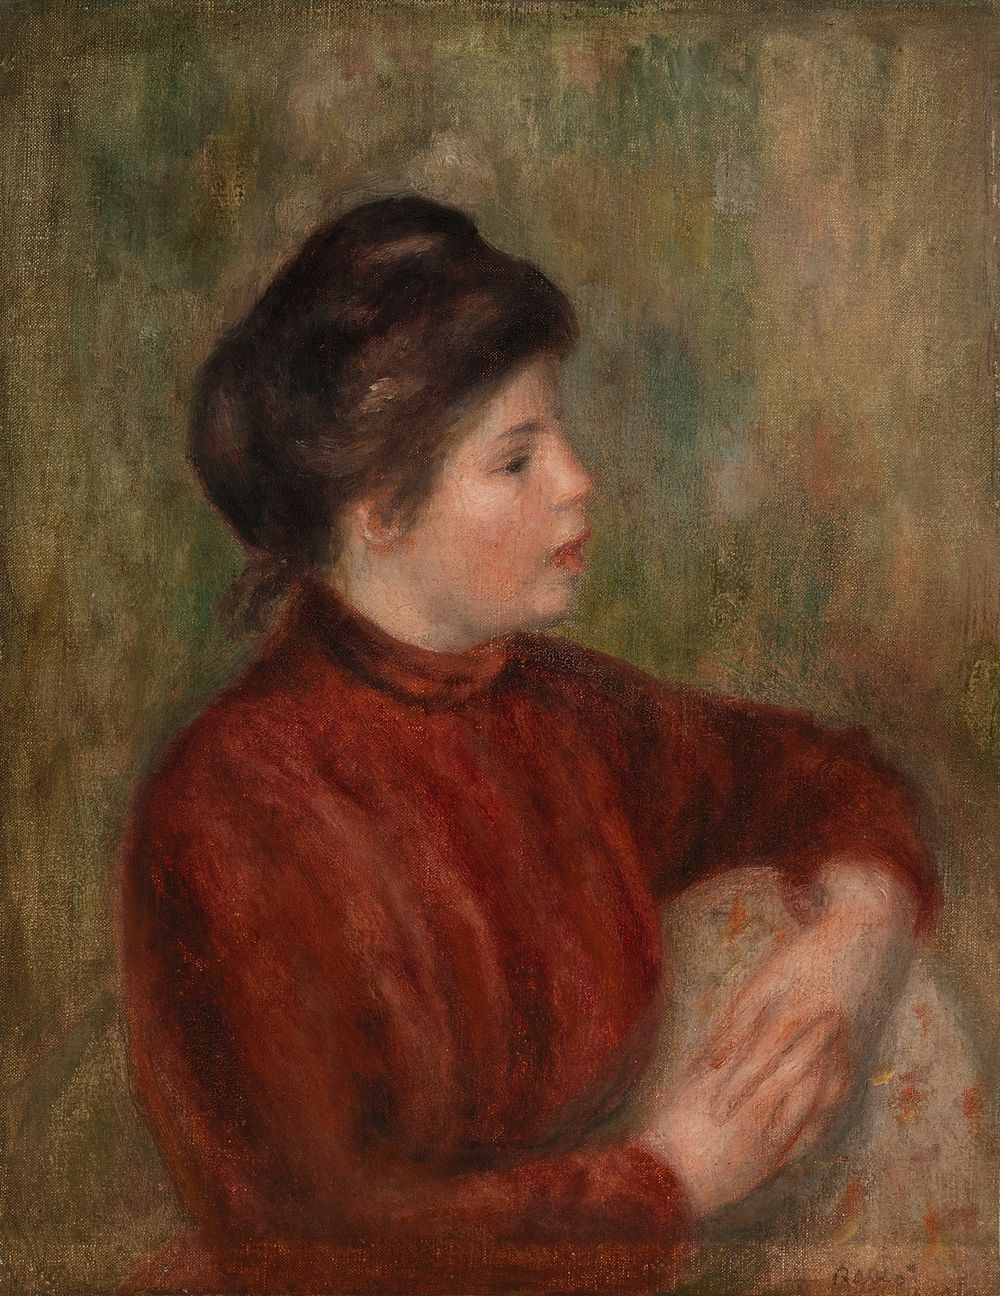 Woman Leaning on a Chair (Femme appuyée sur une chaise) by Pierre Auguste Renoir